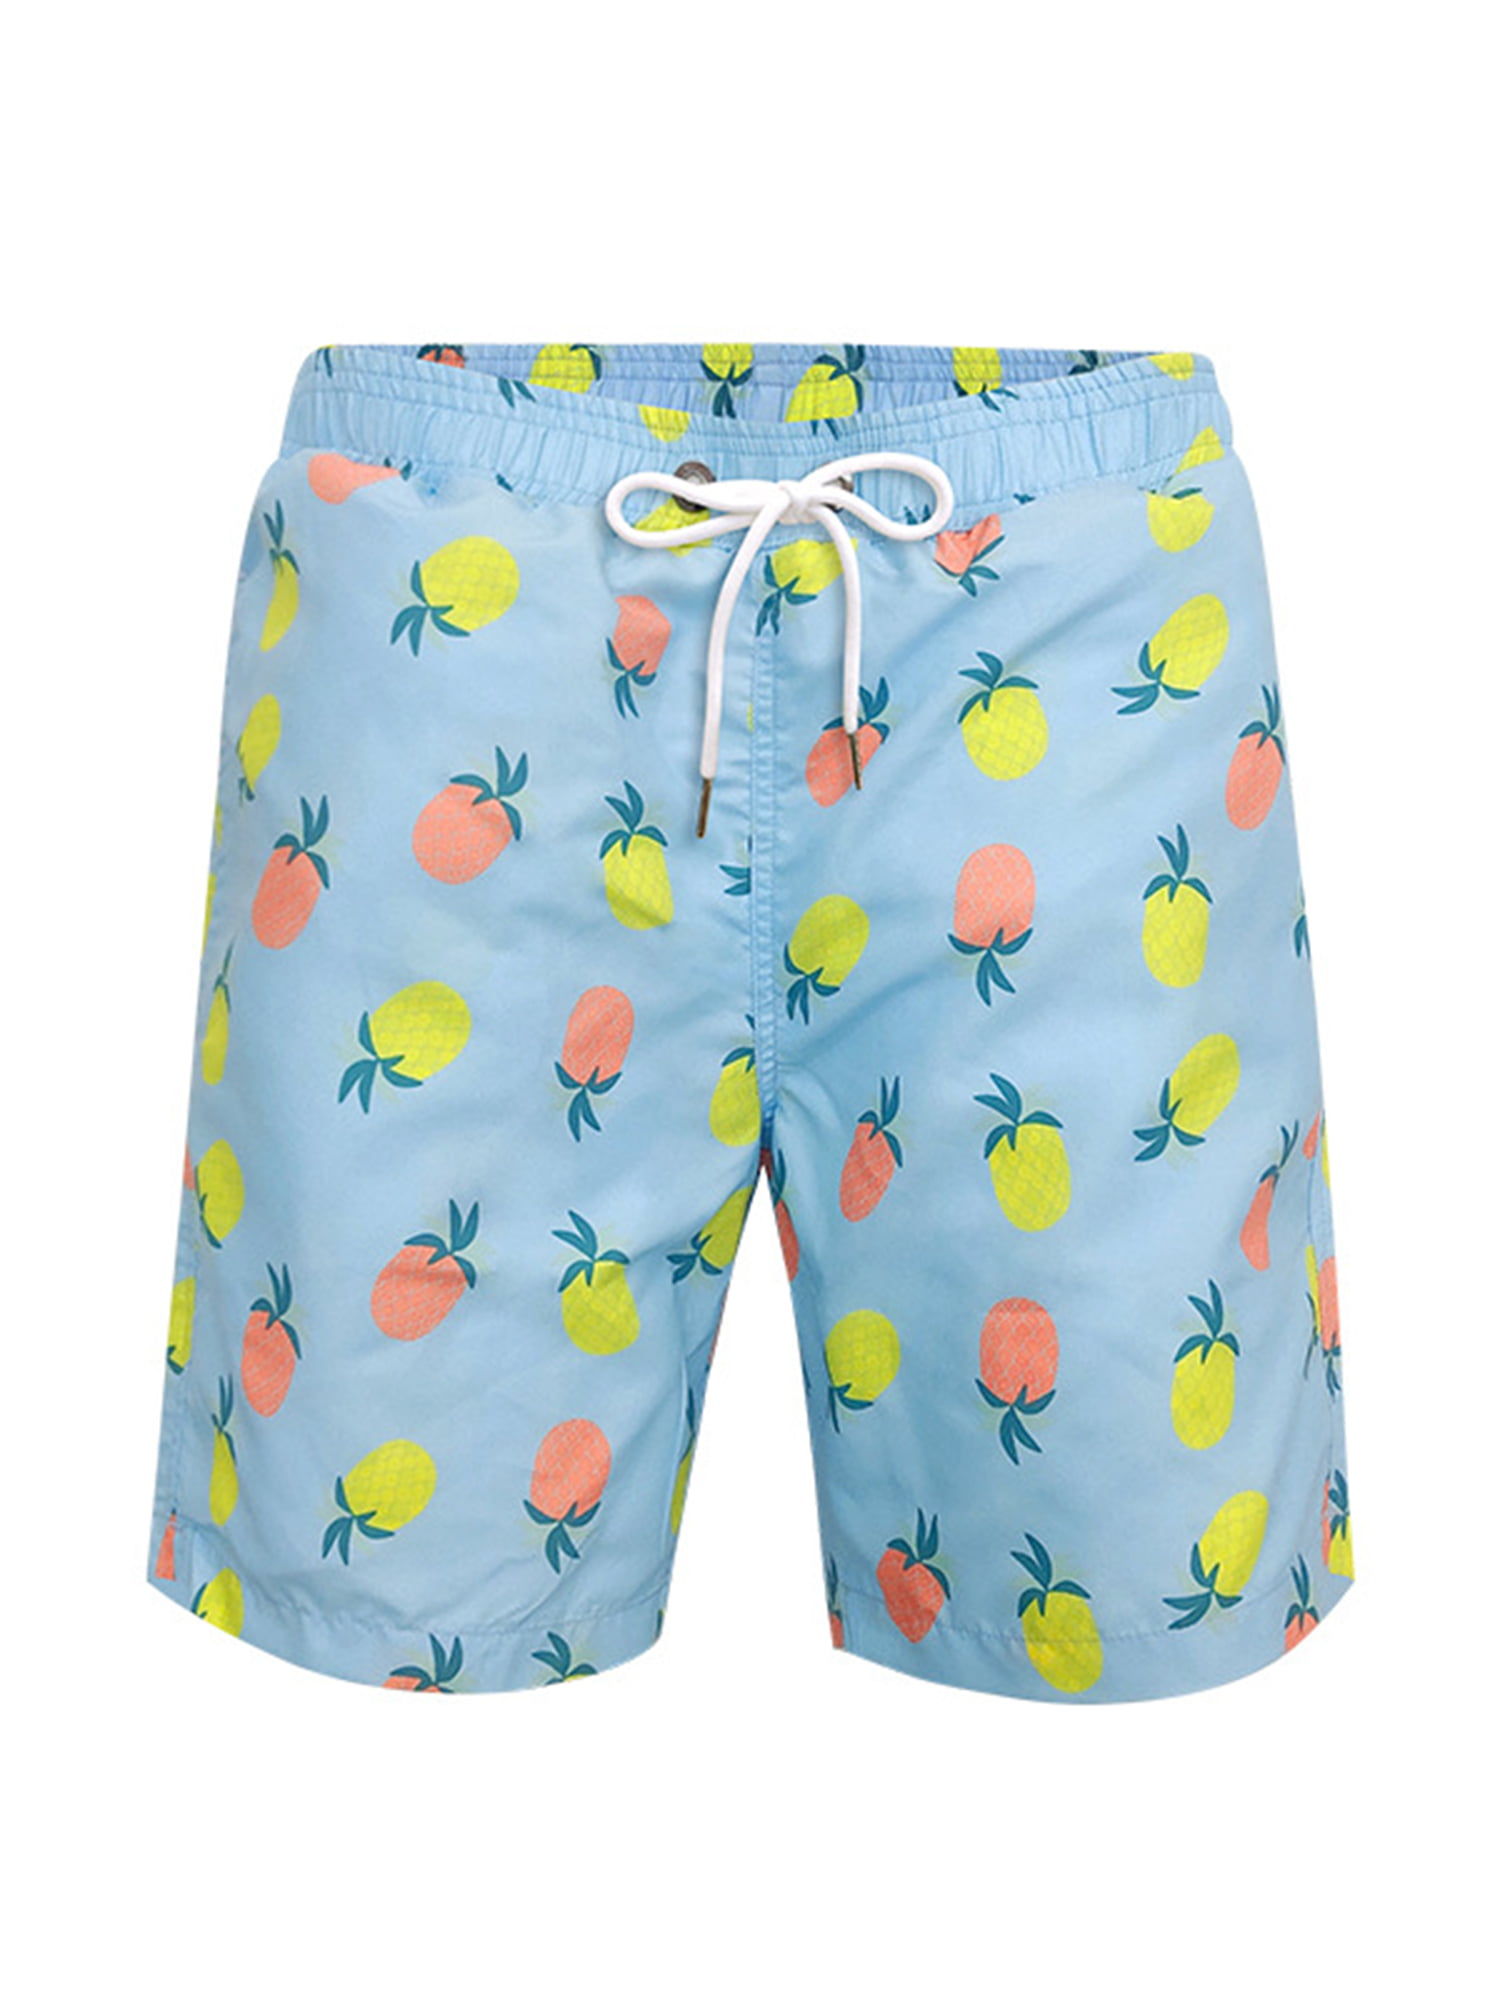 Funny Fruit Printed Swim Trunks Quick Dry Summer Surf Beach Hawaii Board Shorts Swim for Men Shorts 